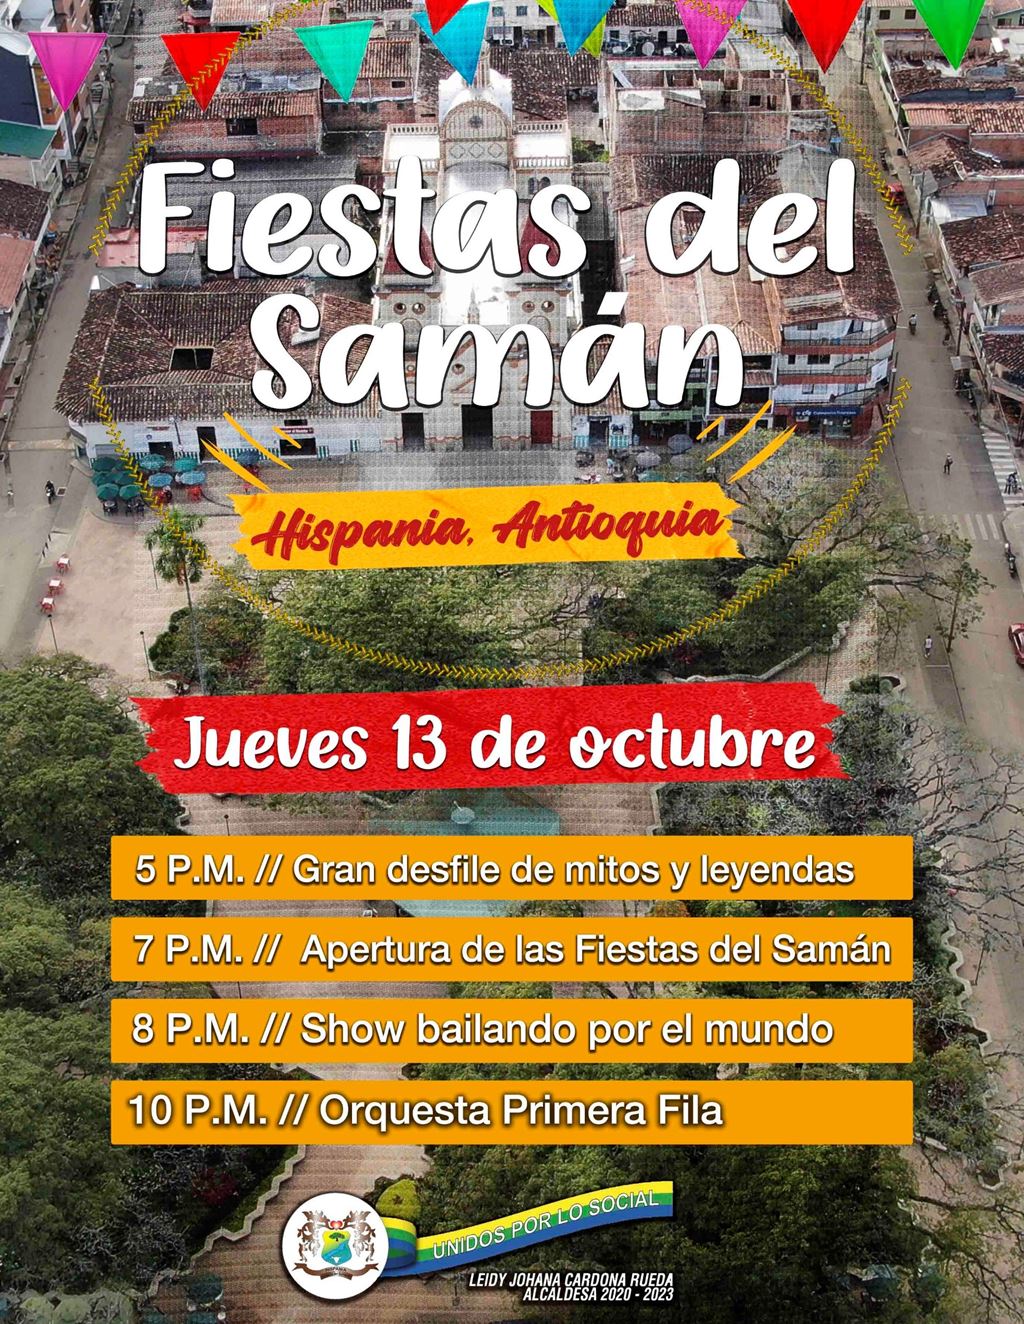 Fiestas del Saman - Hispania 2022 - Antioquia - Jueves 13